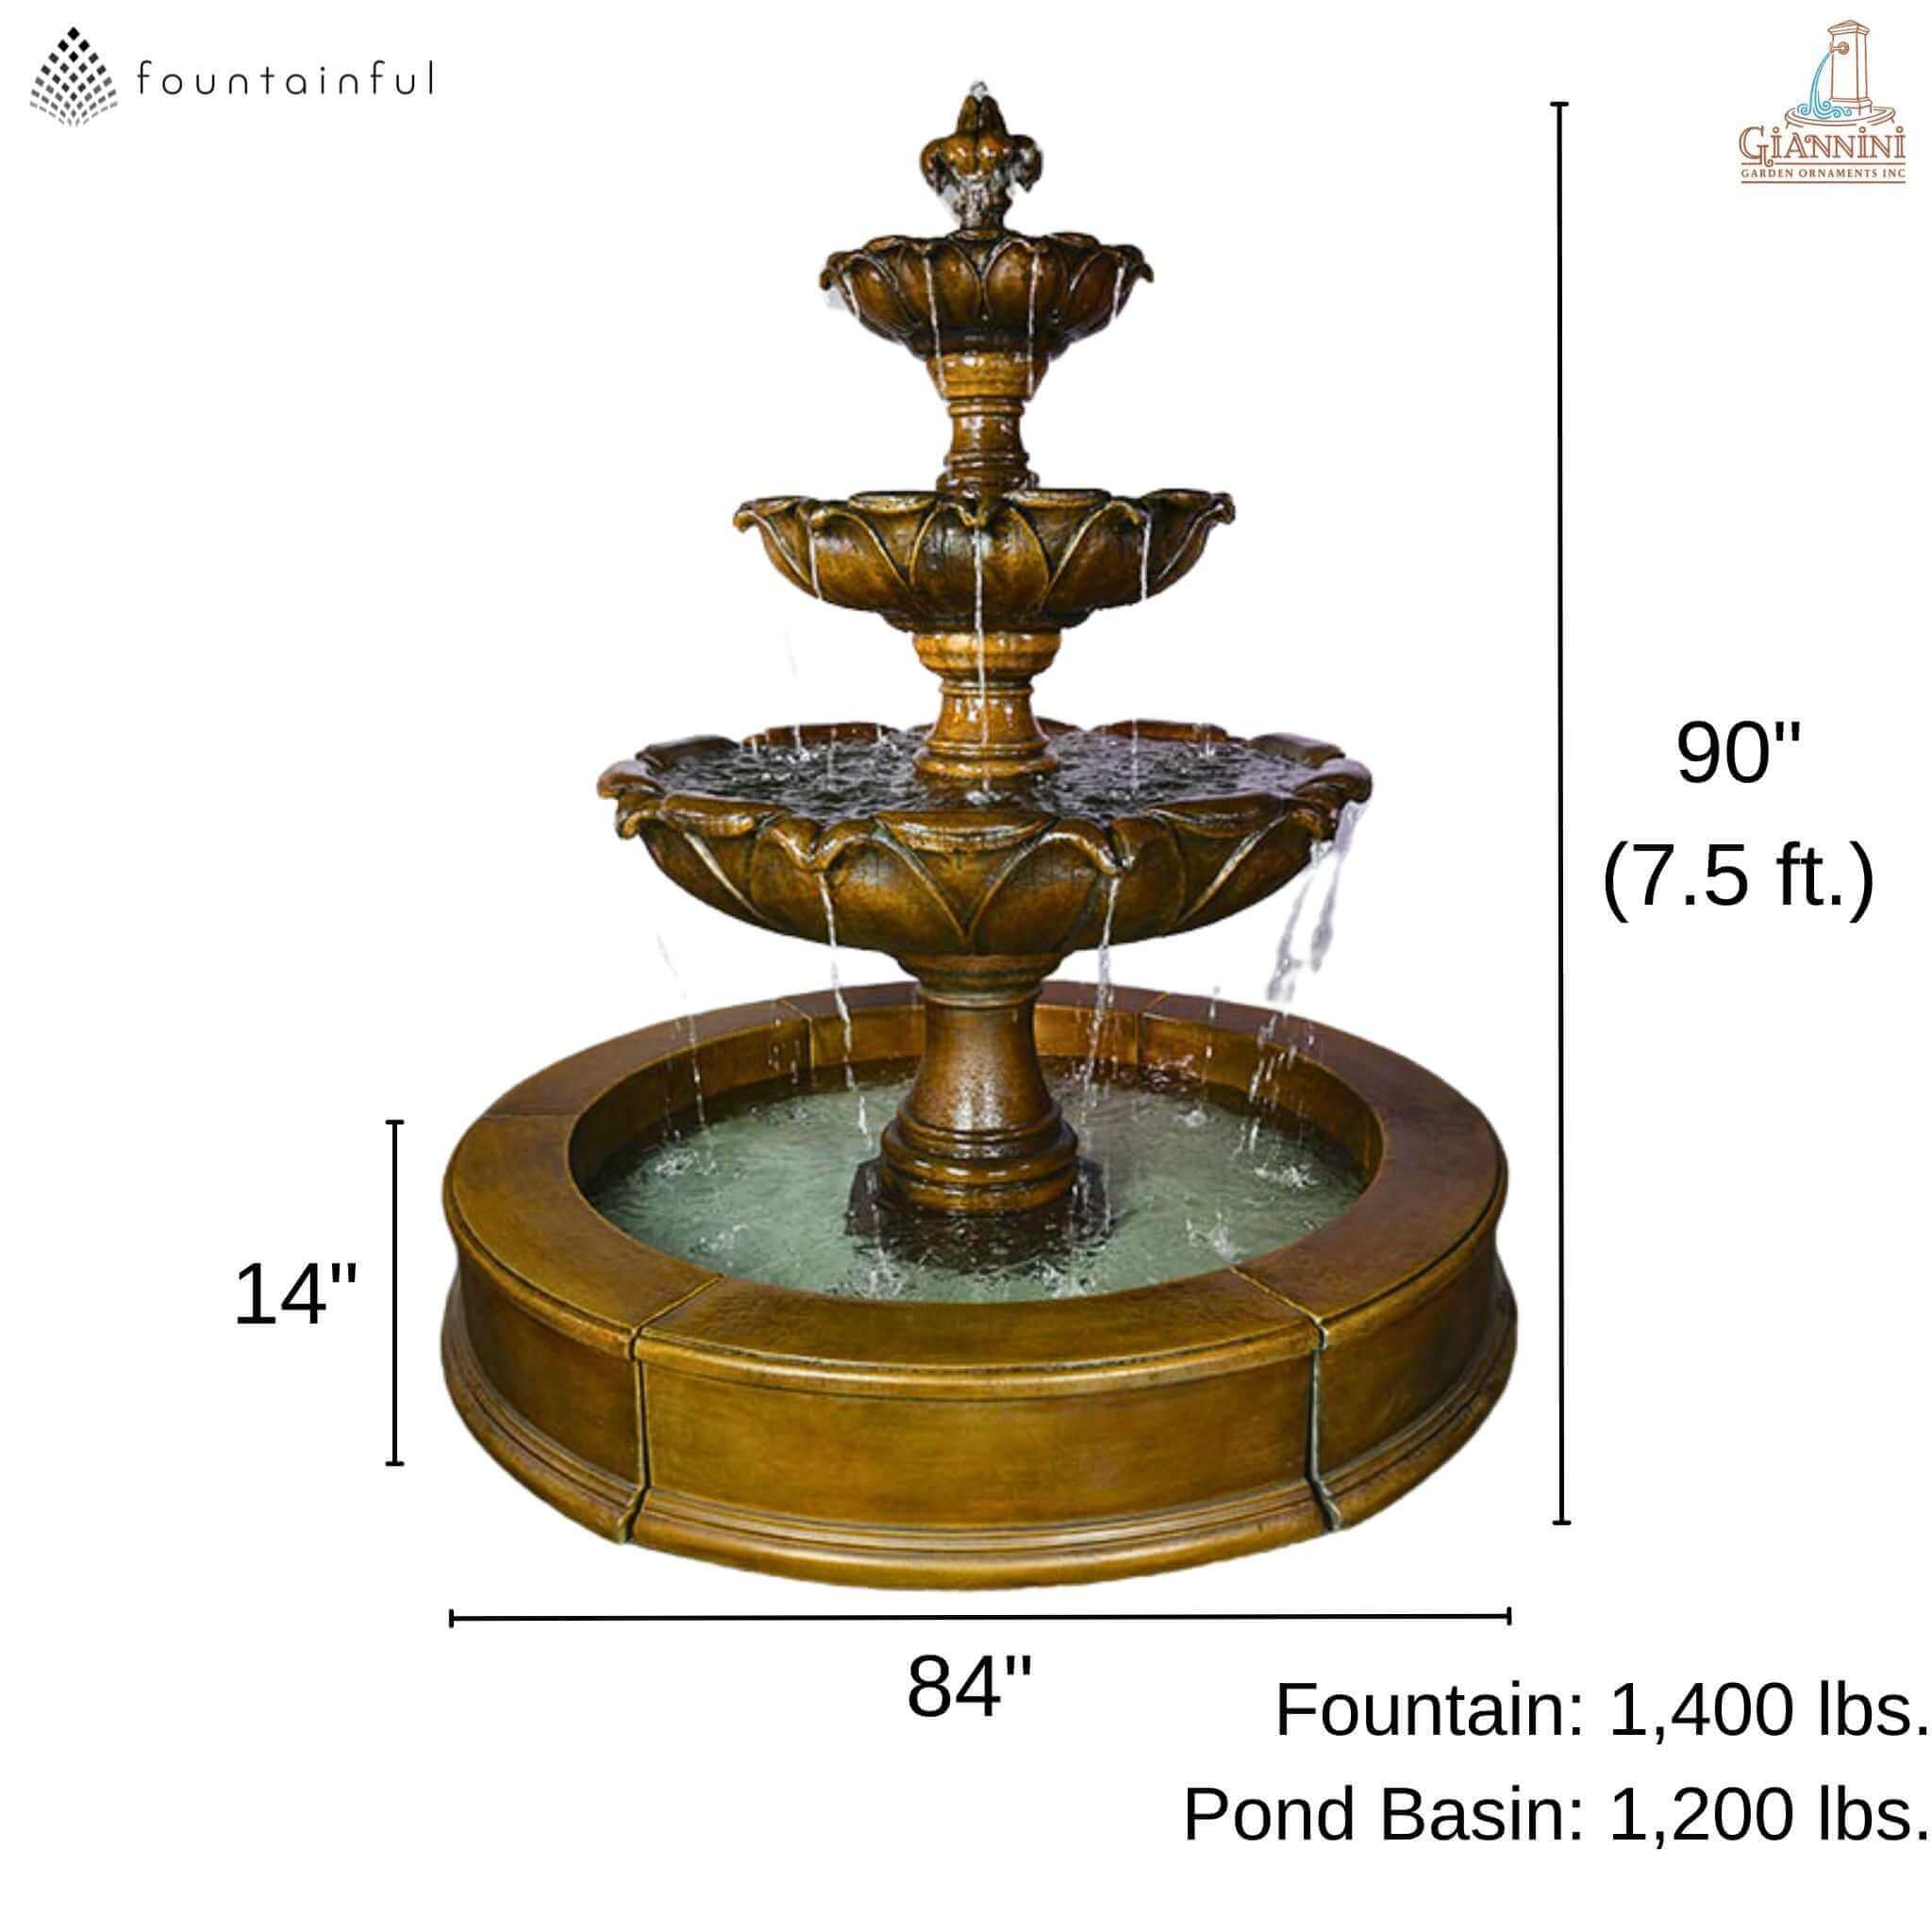 Gardenia 3-Tier w/Pond Concrete Fountain - Giannini #1807